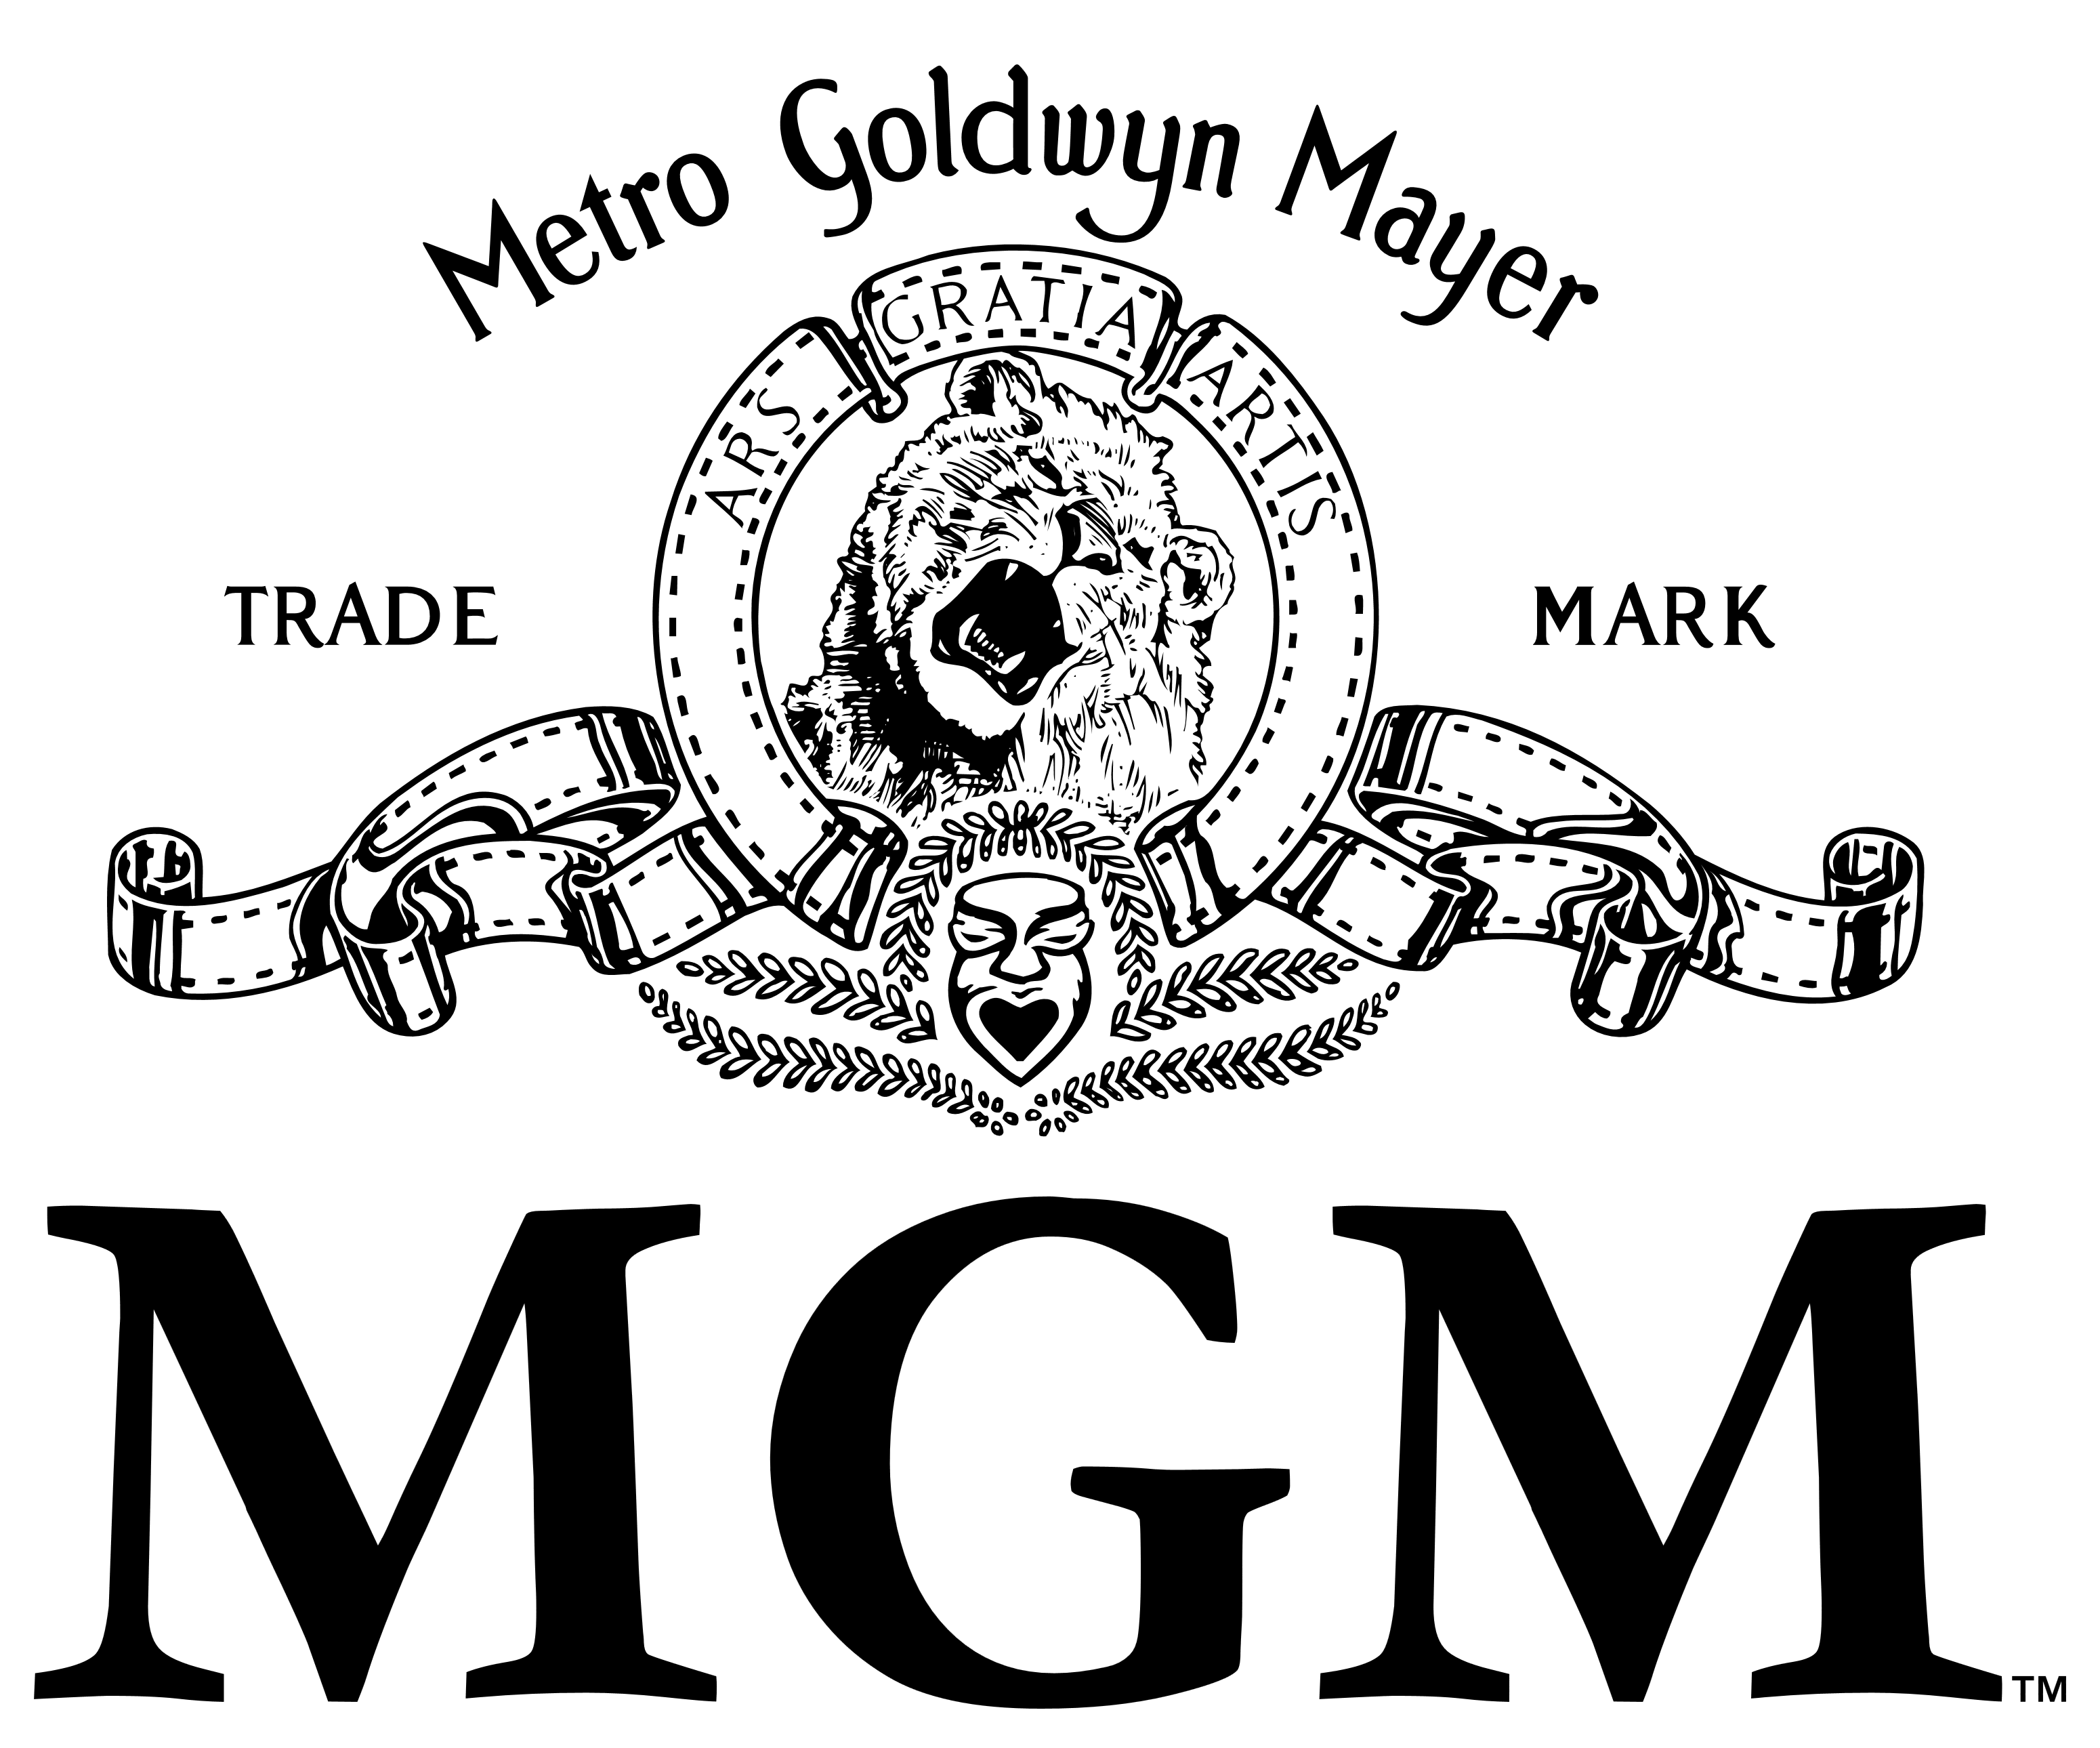 Metro Goldwyn Mayer MGM Logo - MGM (Metro Goldwyn Mayer) – Logos Download